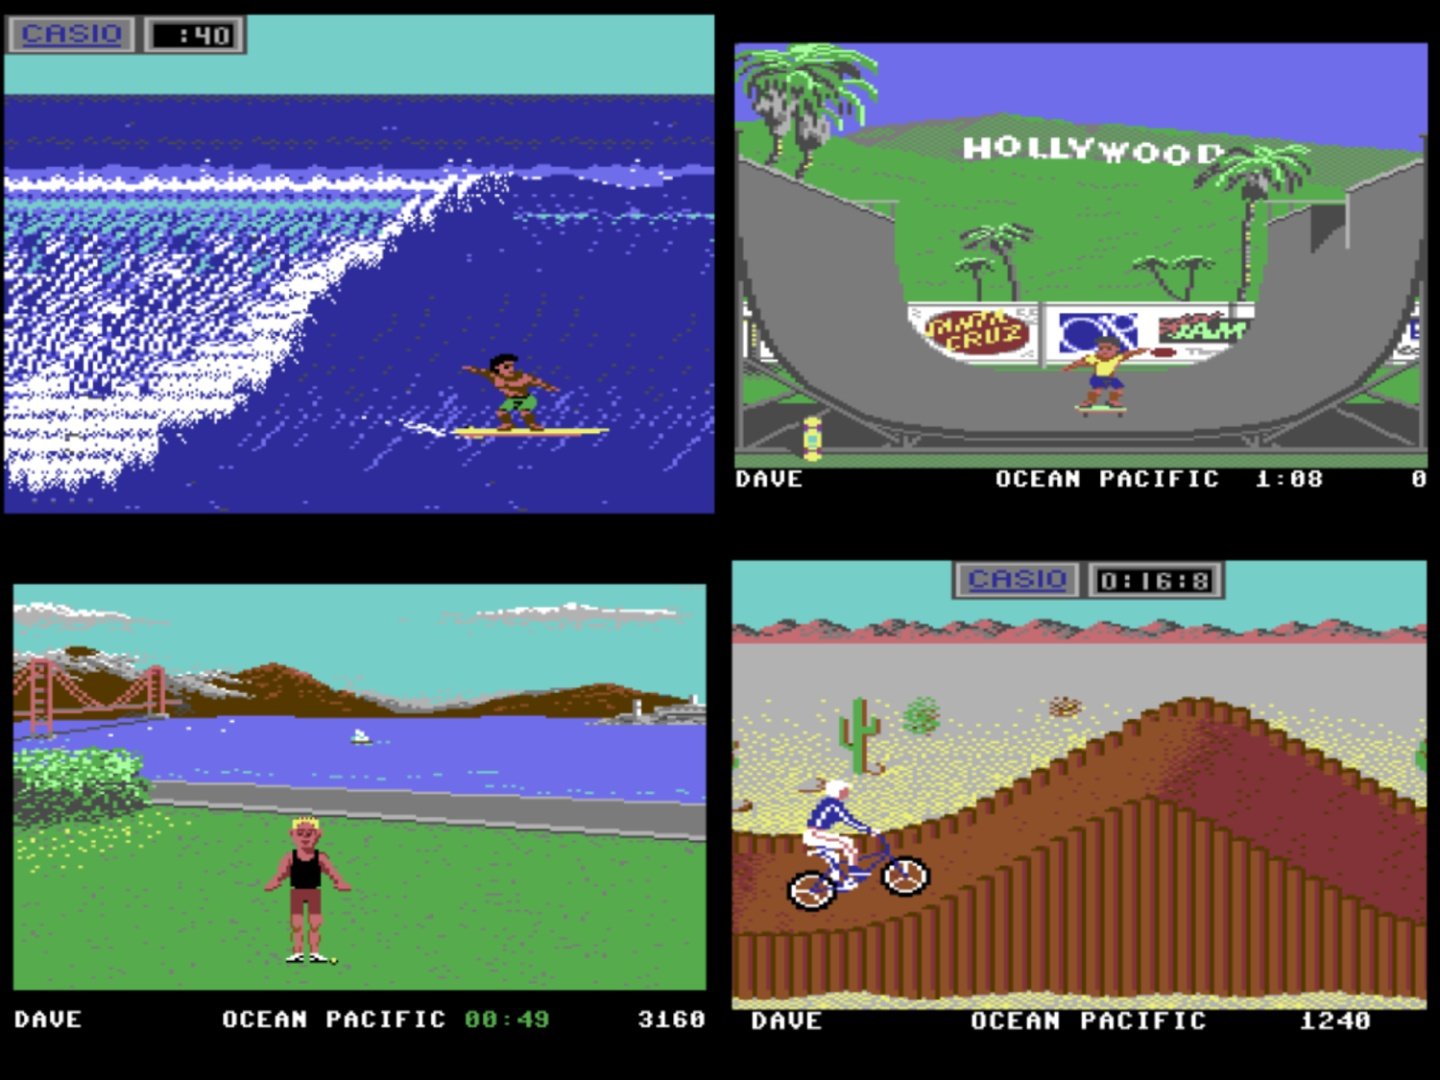 The C64 version of California Game